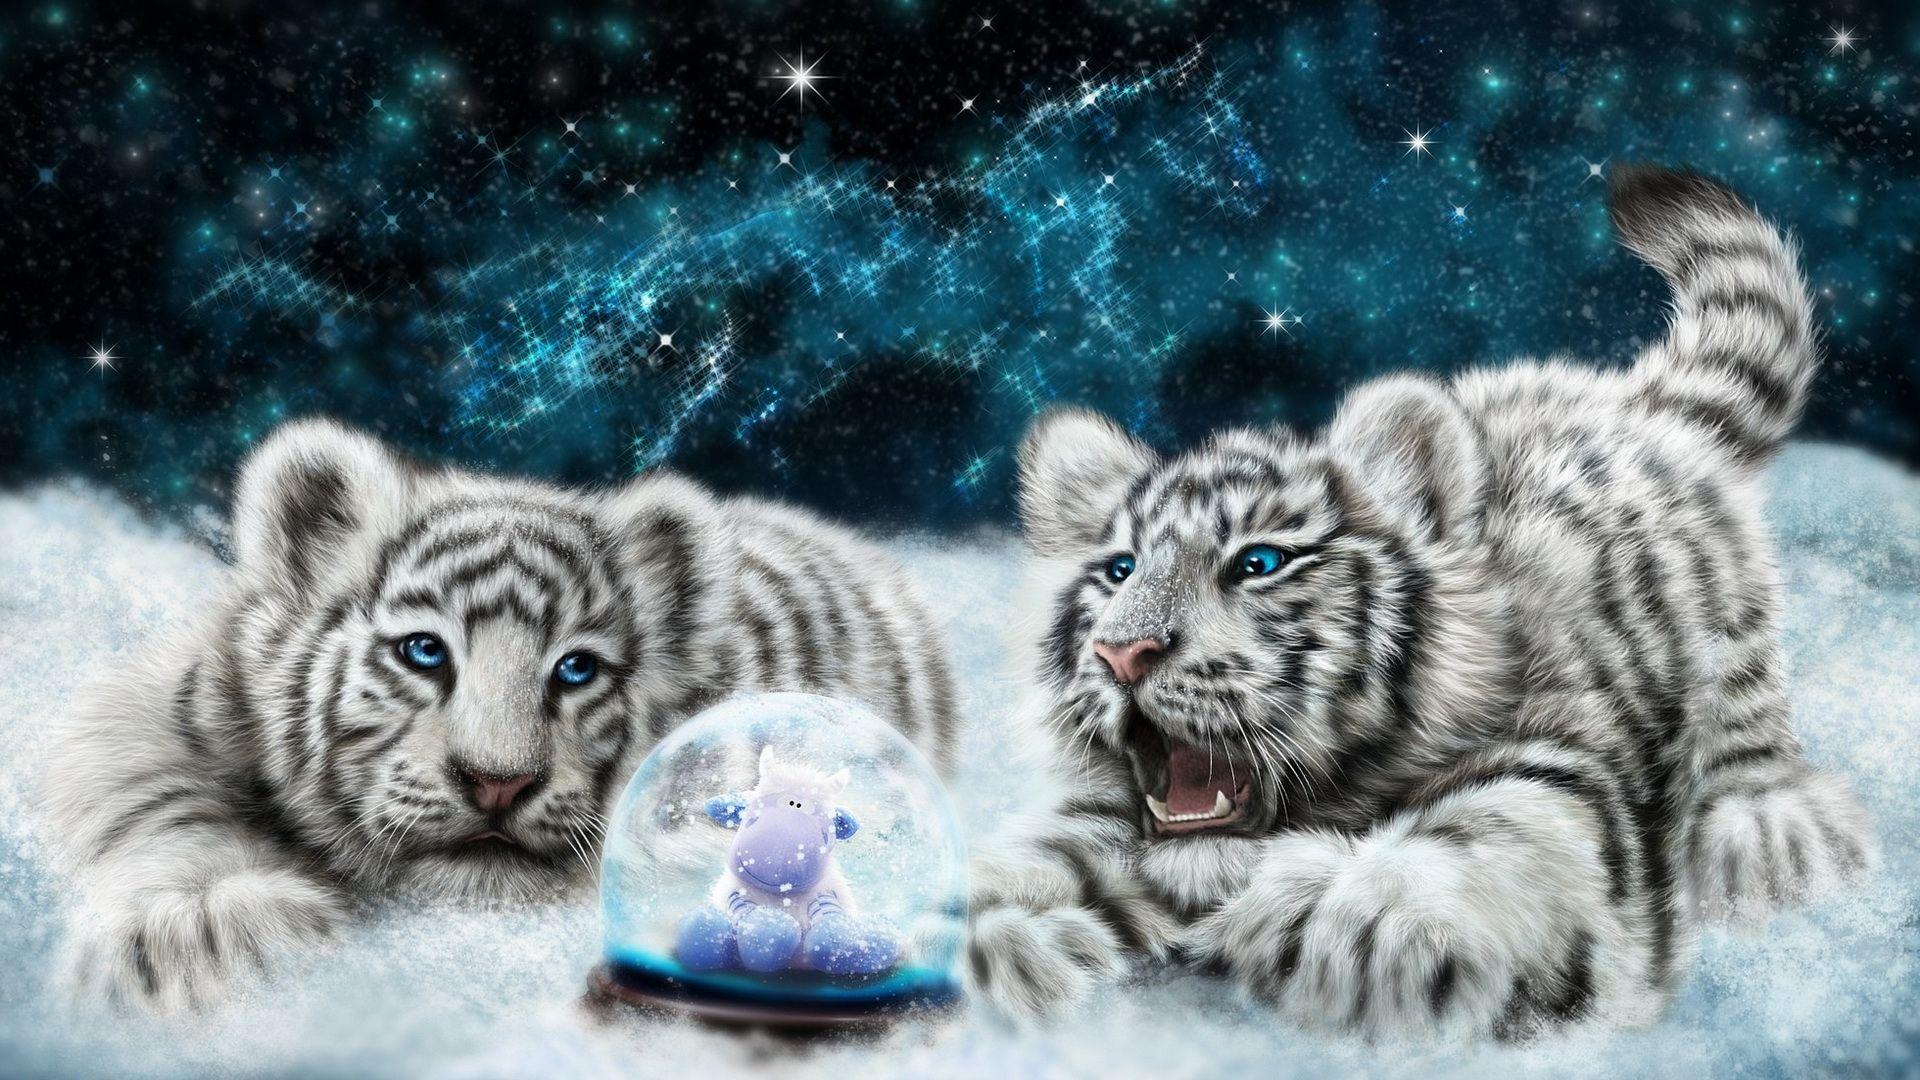 Pics Photos   White Tiger In Snow Wallpaper Hd For Desktop